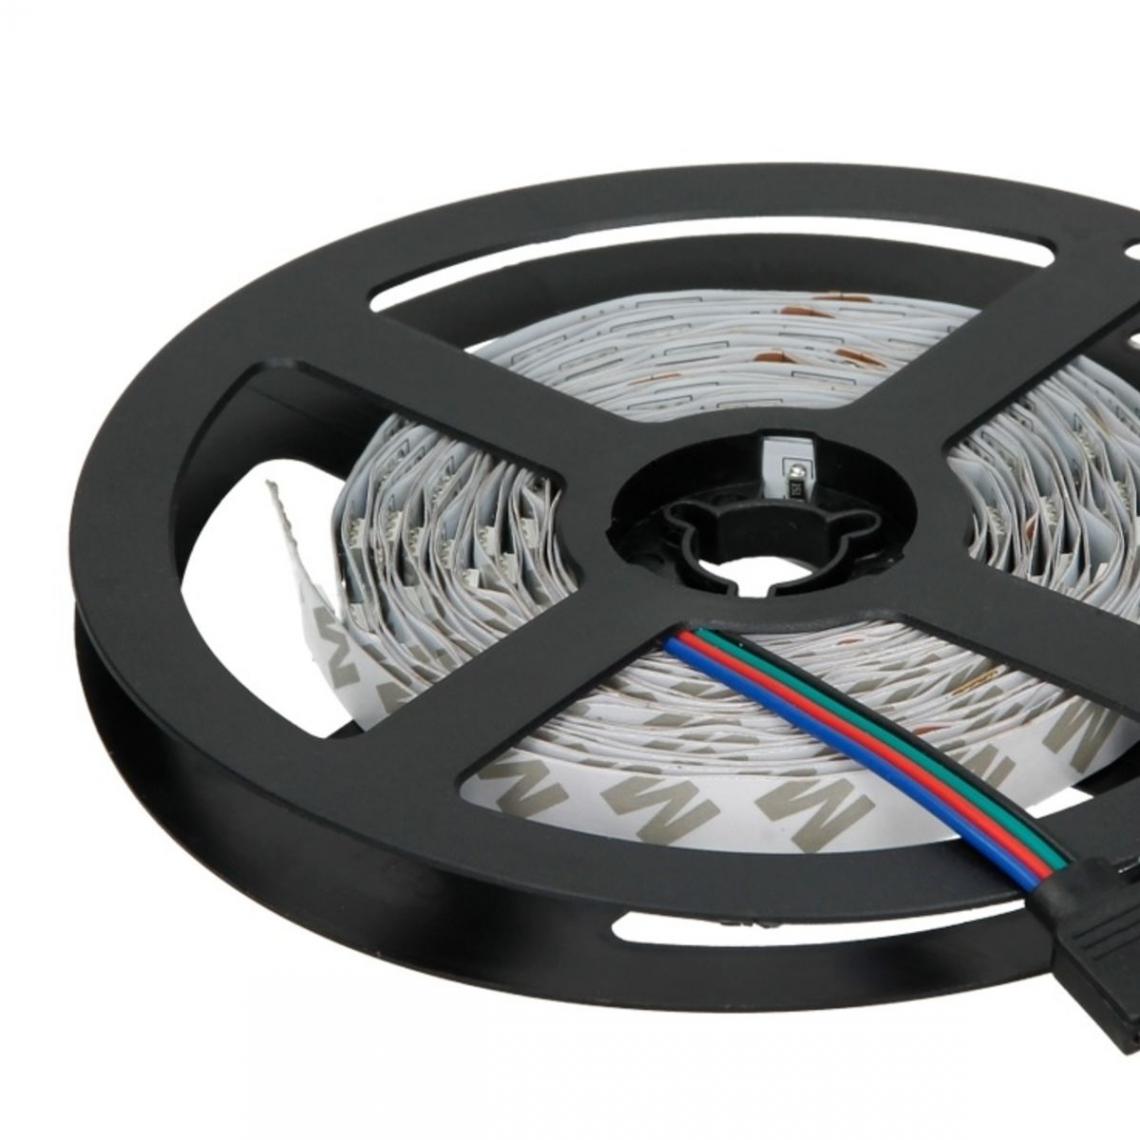 Ecd Germany - Bandes LED 2 m, RGB, étanche - 60 LED par mètre - Ruban LED